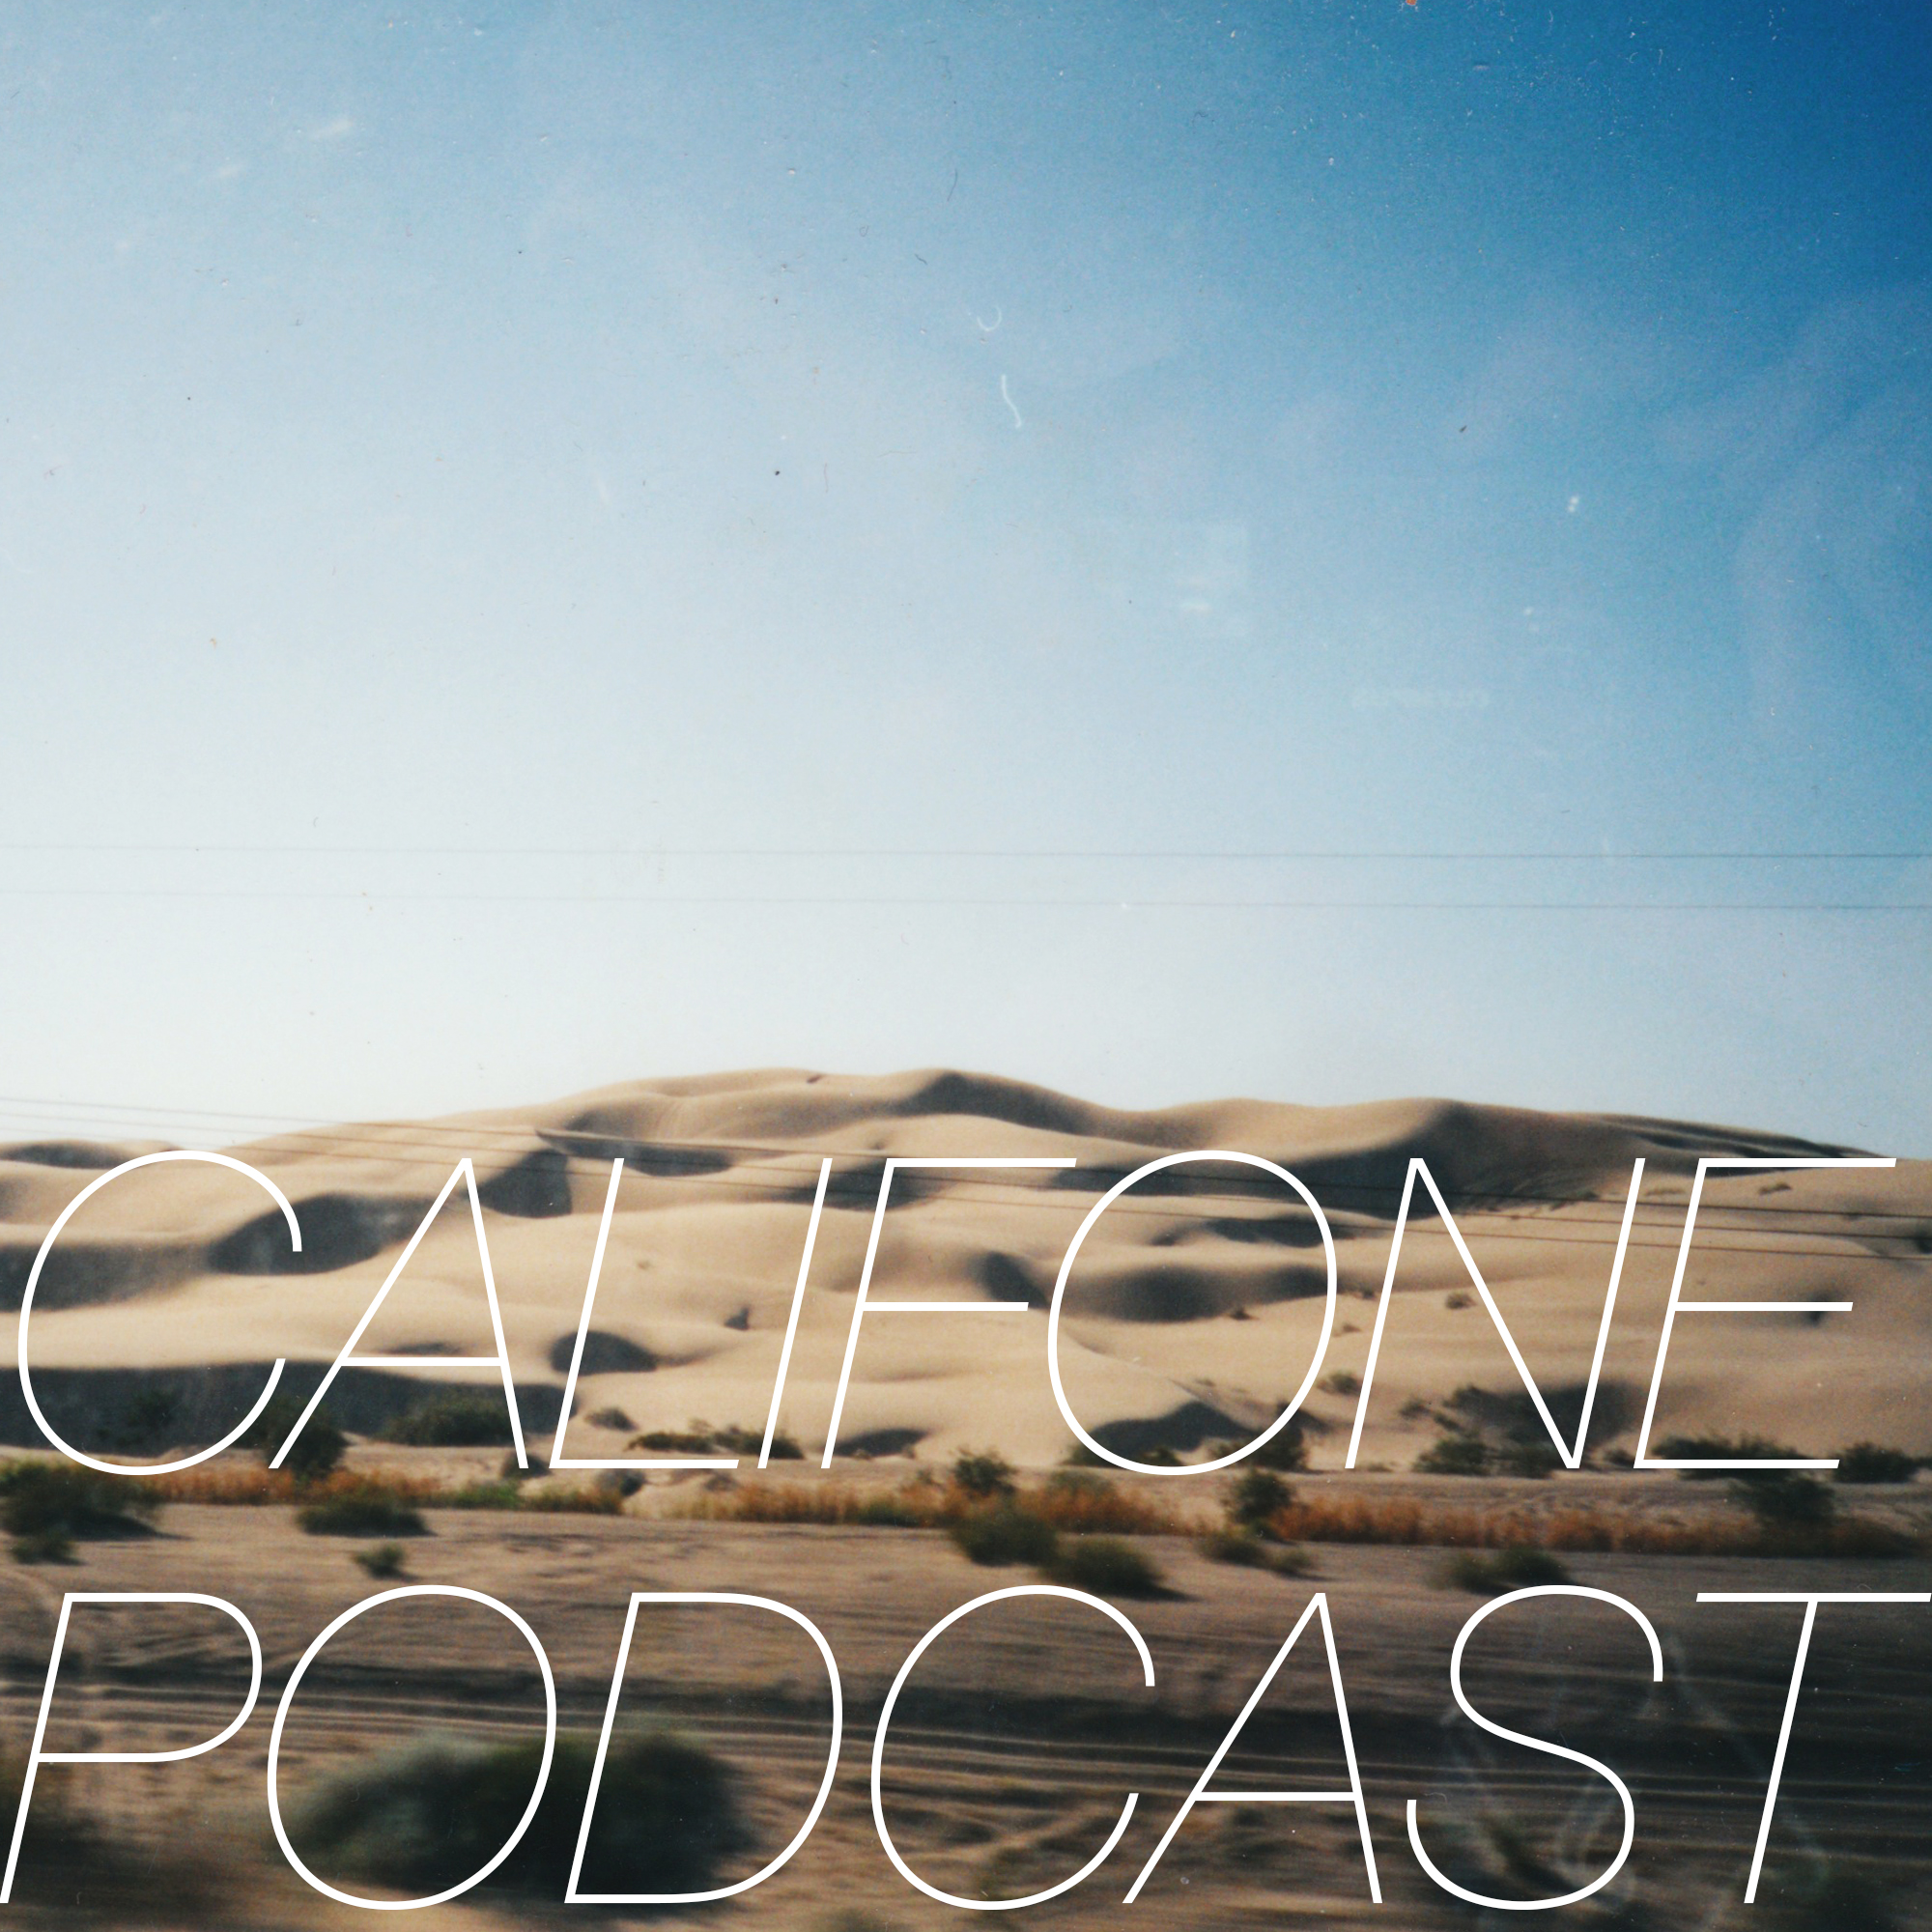 podcasts – califone